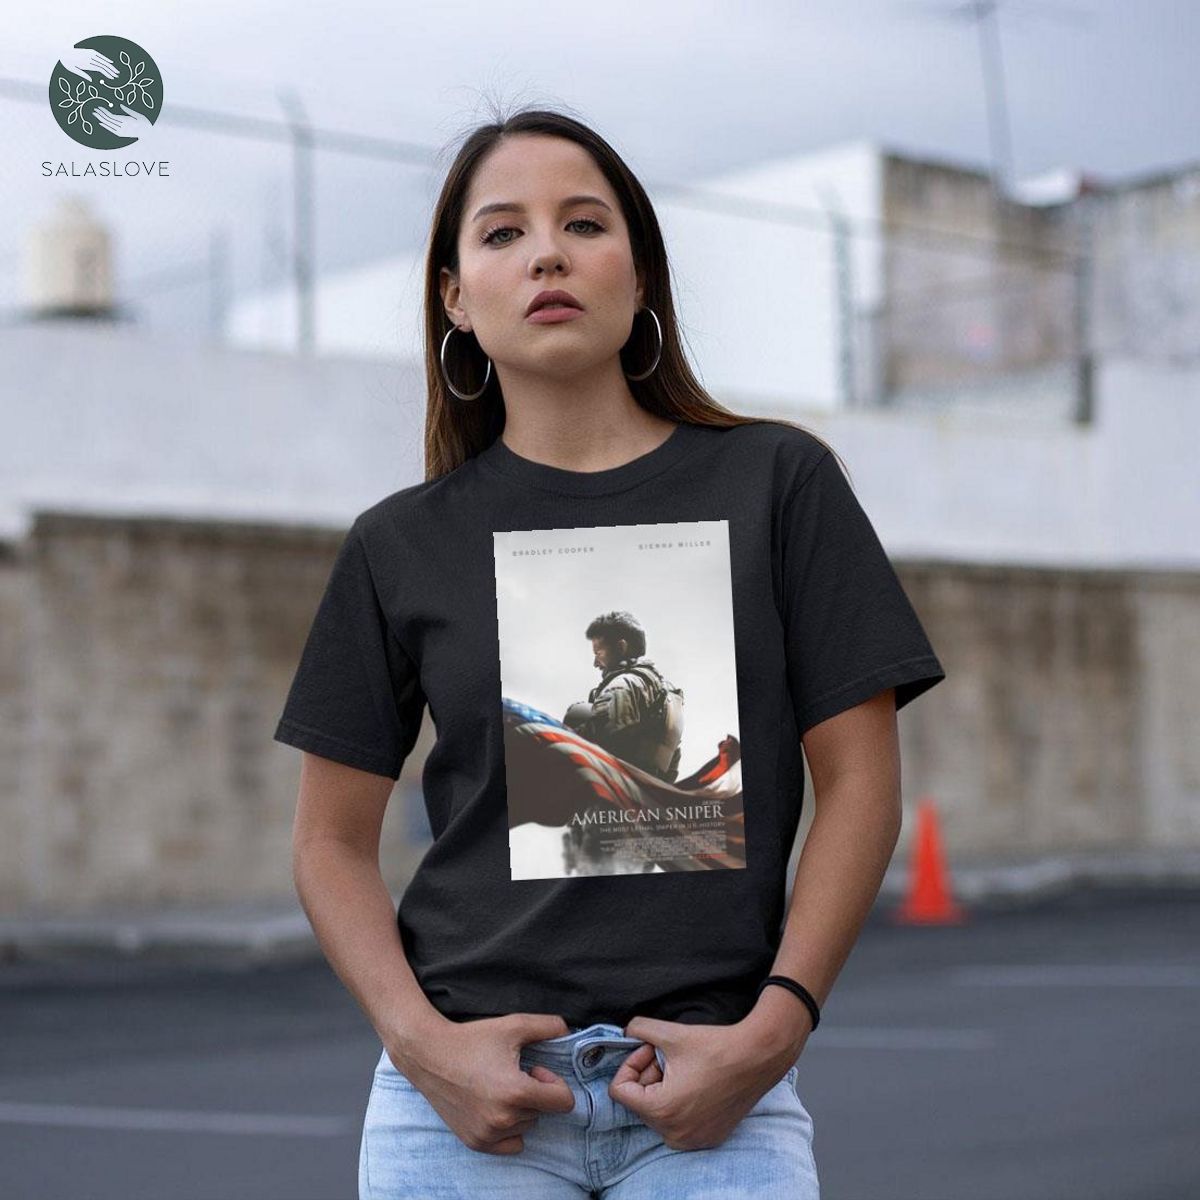 American Sniper Bradley Cooper USA Soldier Hot Movie T-shirt